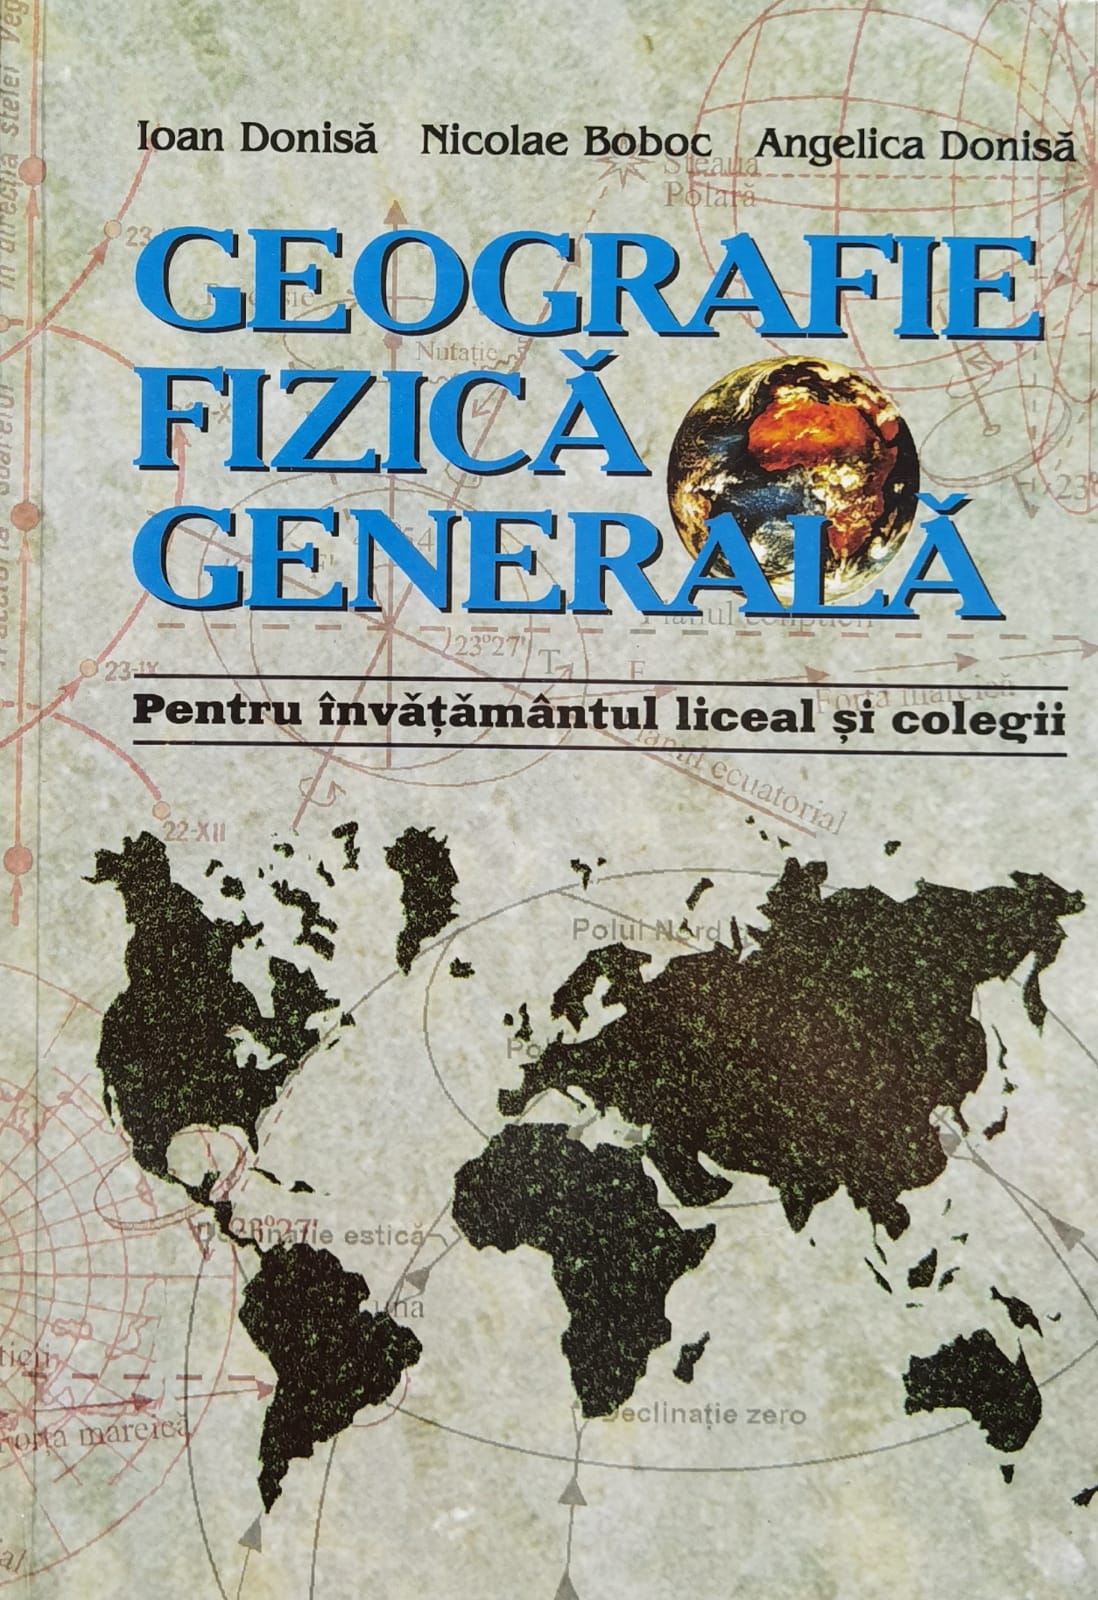 geografie fizica generala pentru invatamantul liceal si colegii                                      ioan donisa, nicolae boboc, angelica donisa                                                         